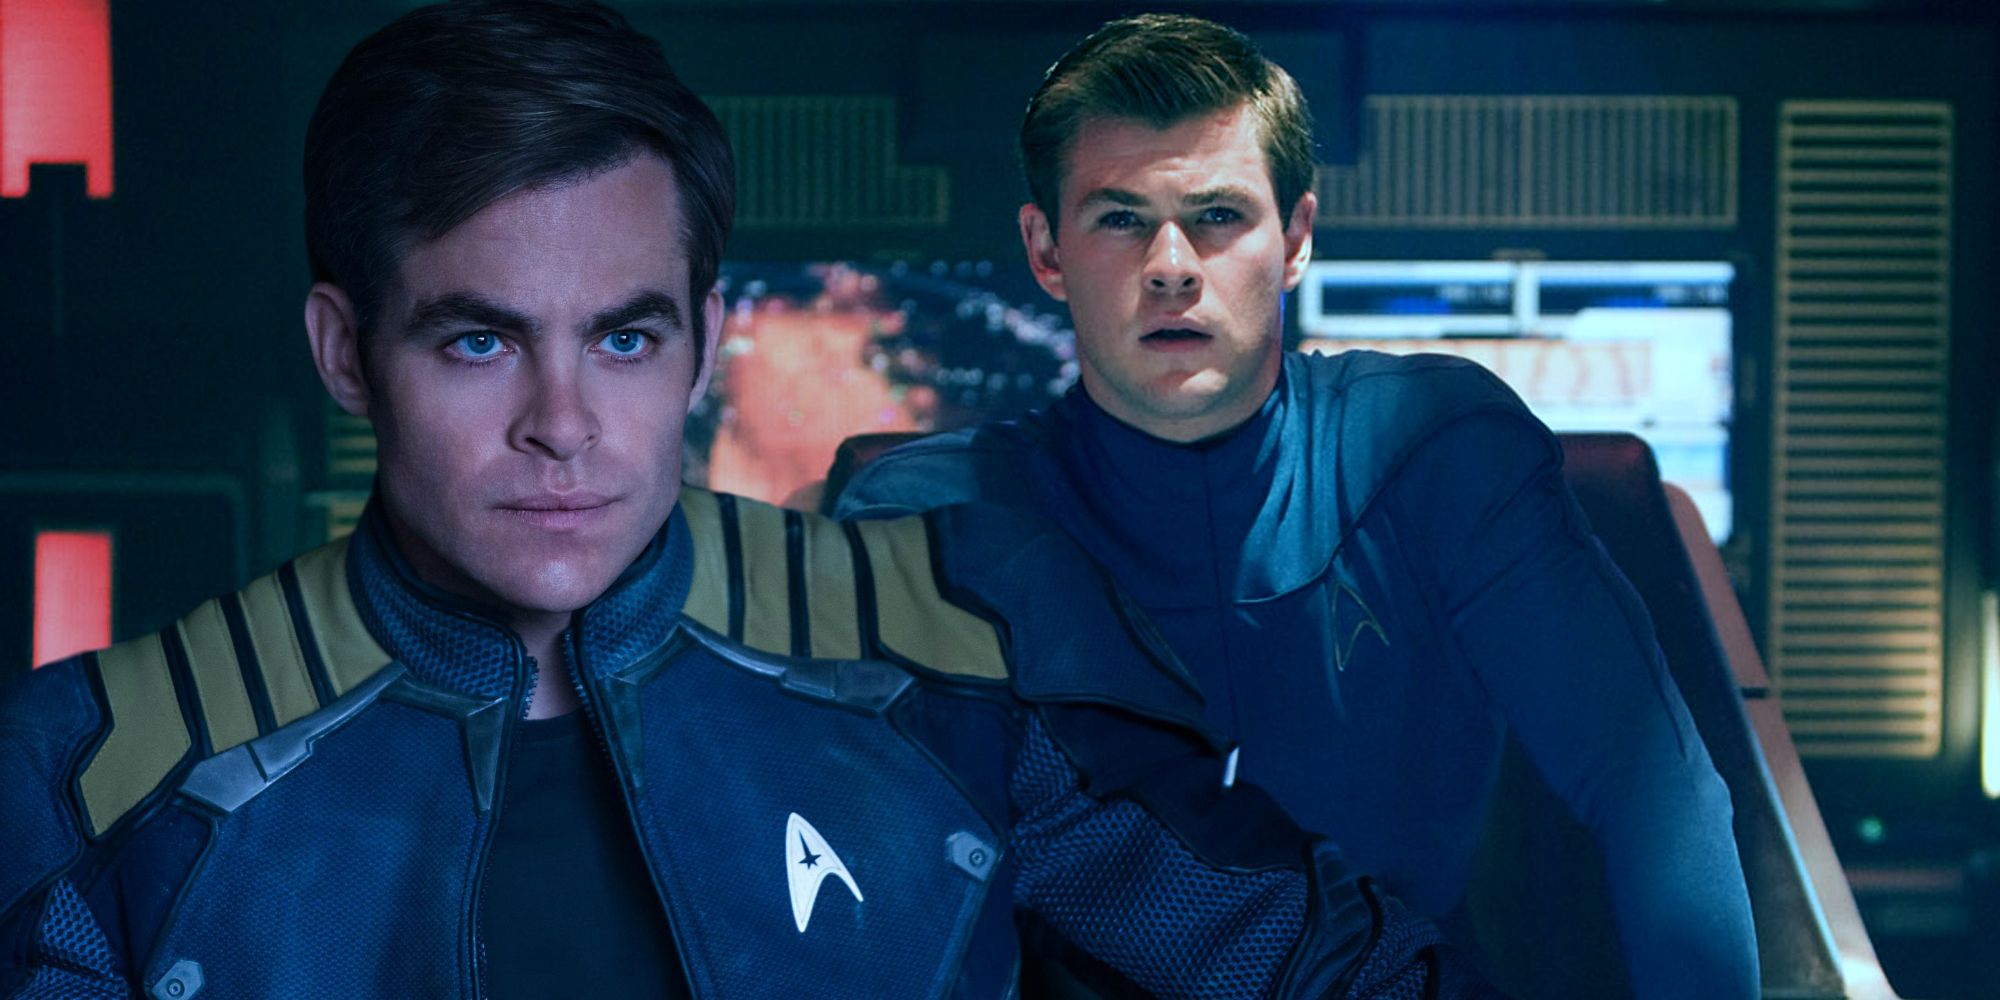 Star Trek Movies & TV: What The Franchise’s Future Looks Like